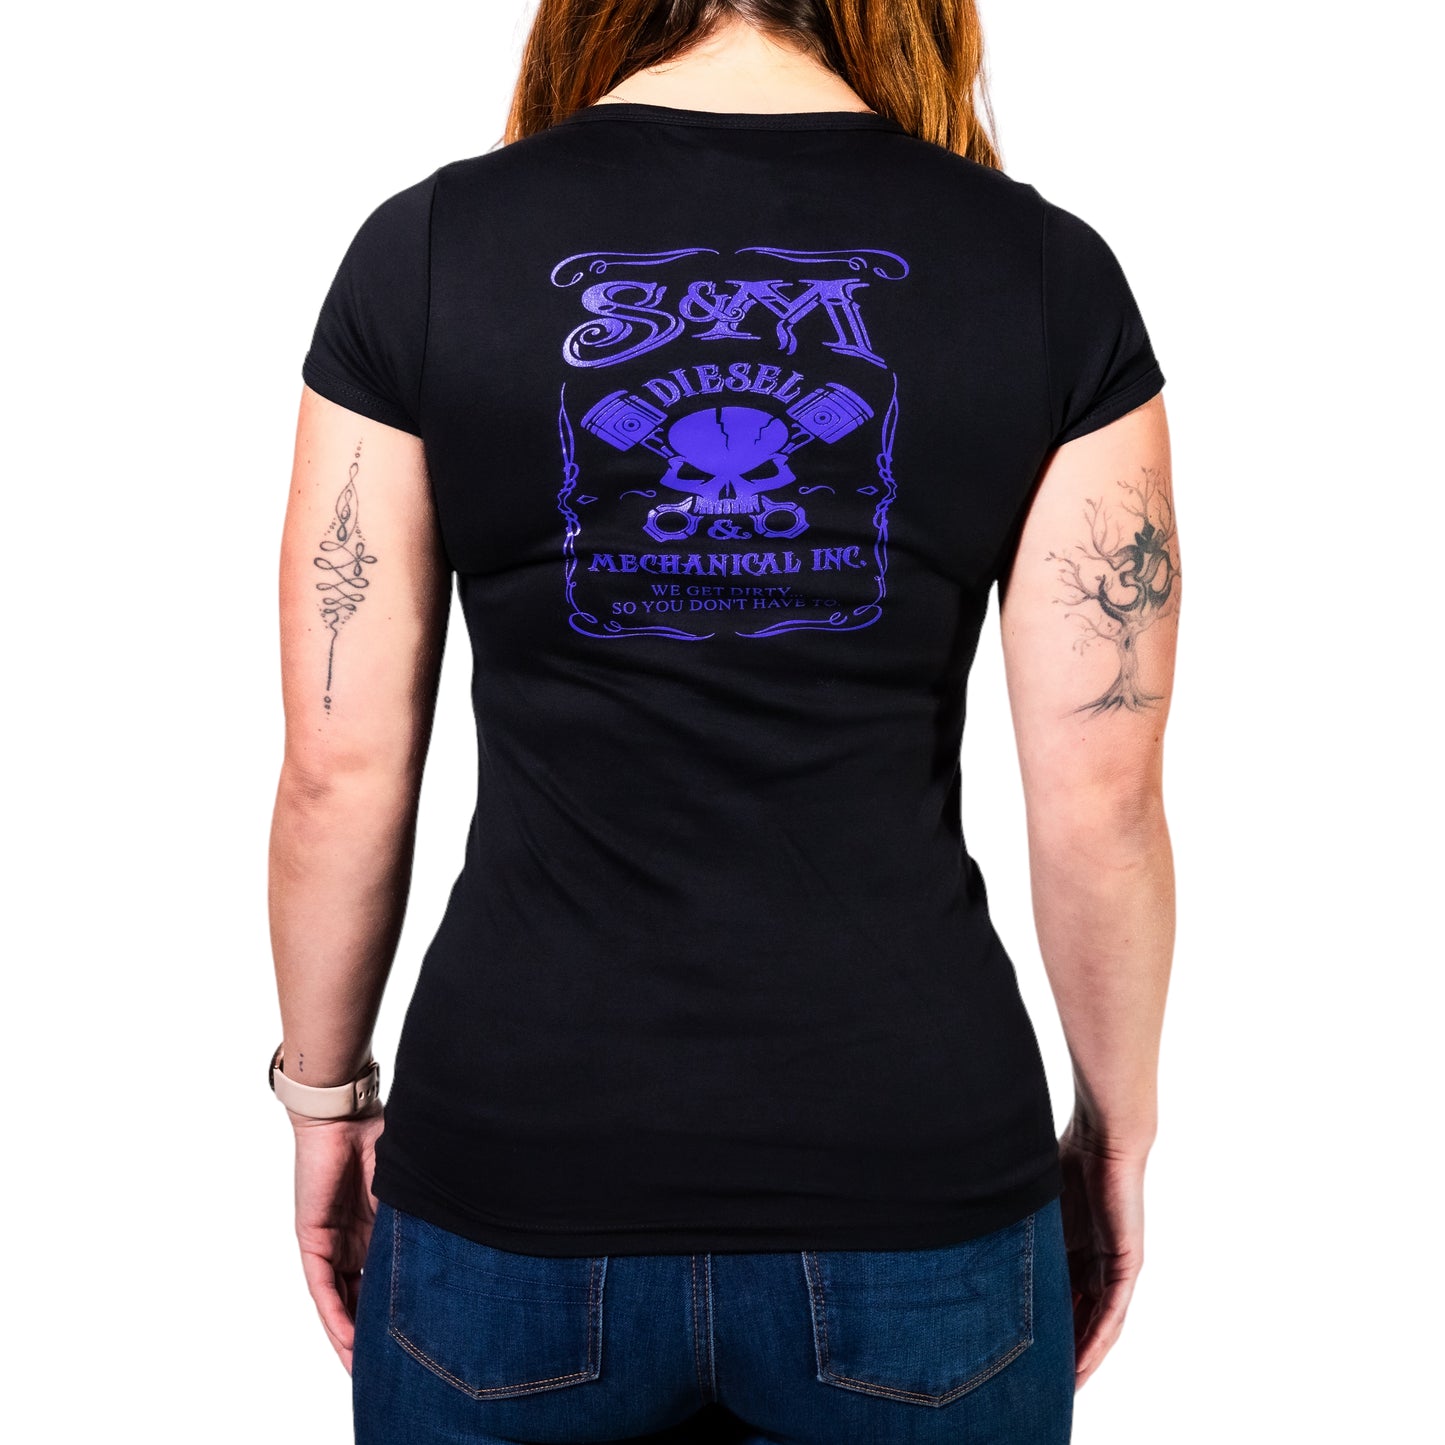 S&M Diesel Woman’s Logo scoop front T-Shirt- 5 color options avail